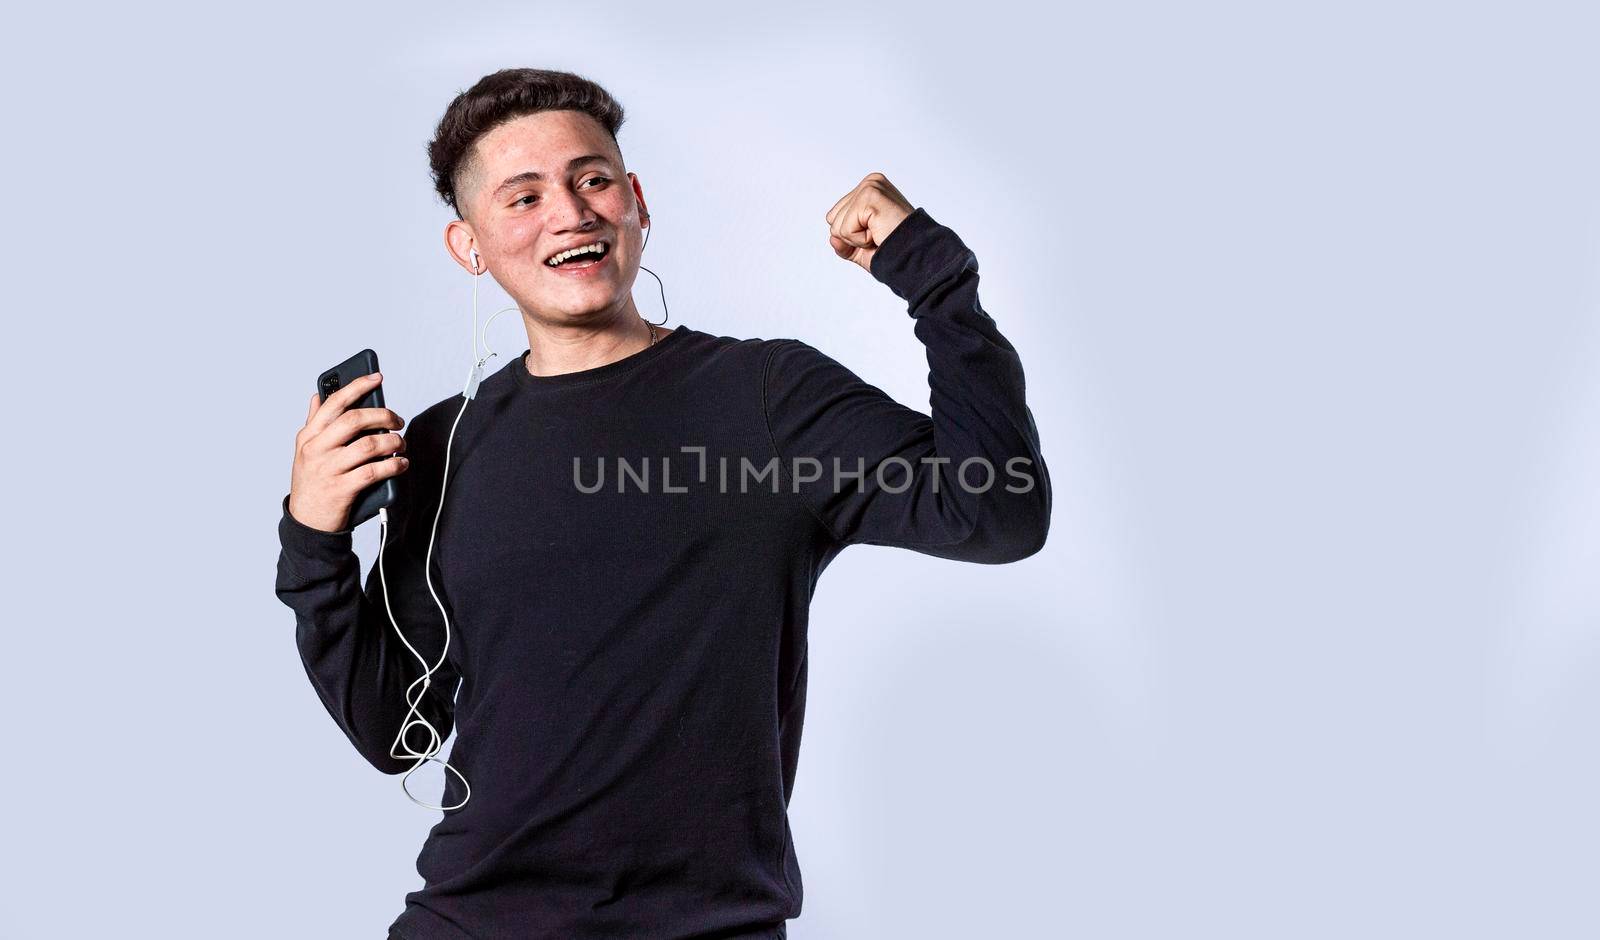 Guy with headphones raising his hand in victory sign, Guy with cellphone raising his hand excited